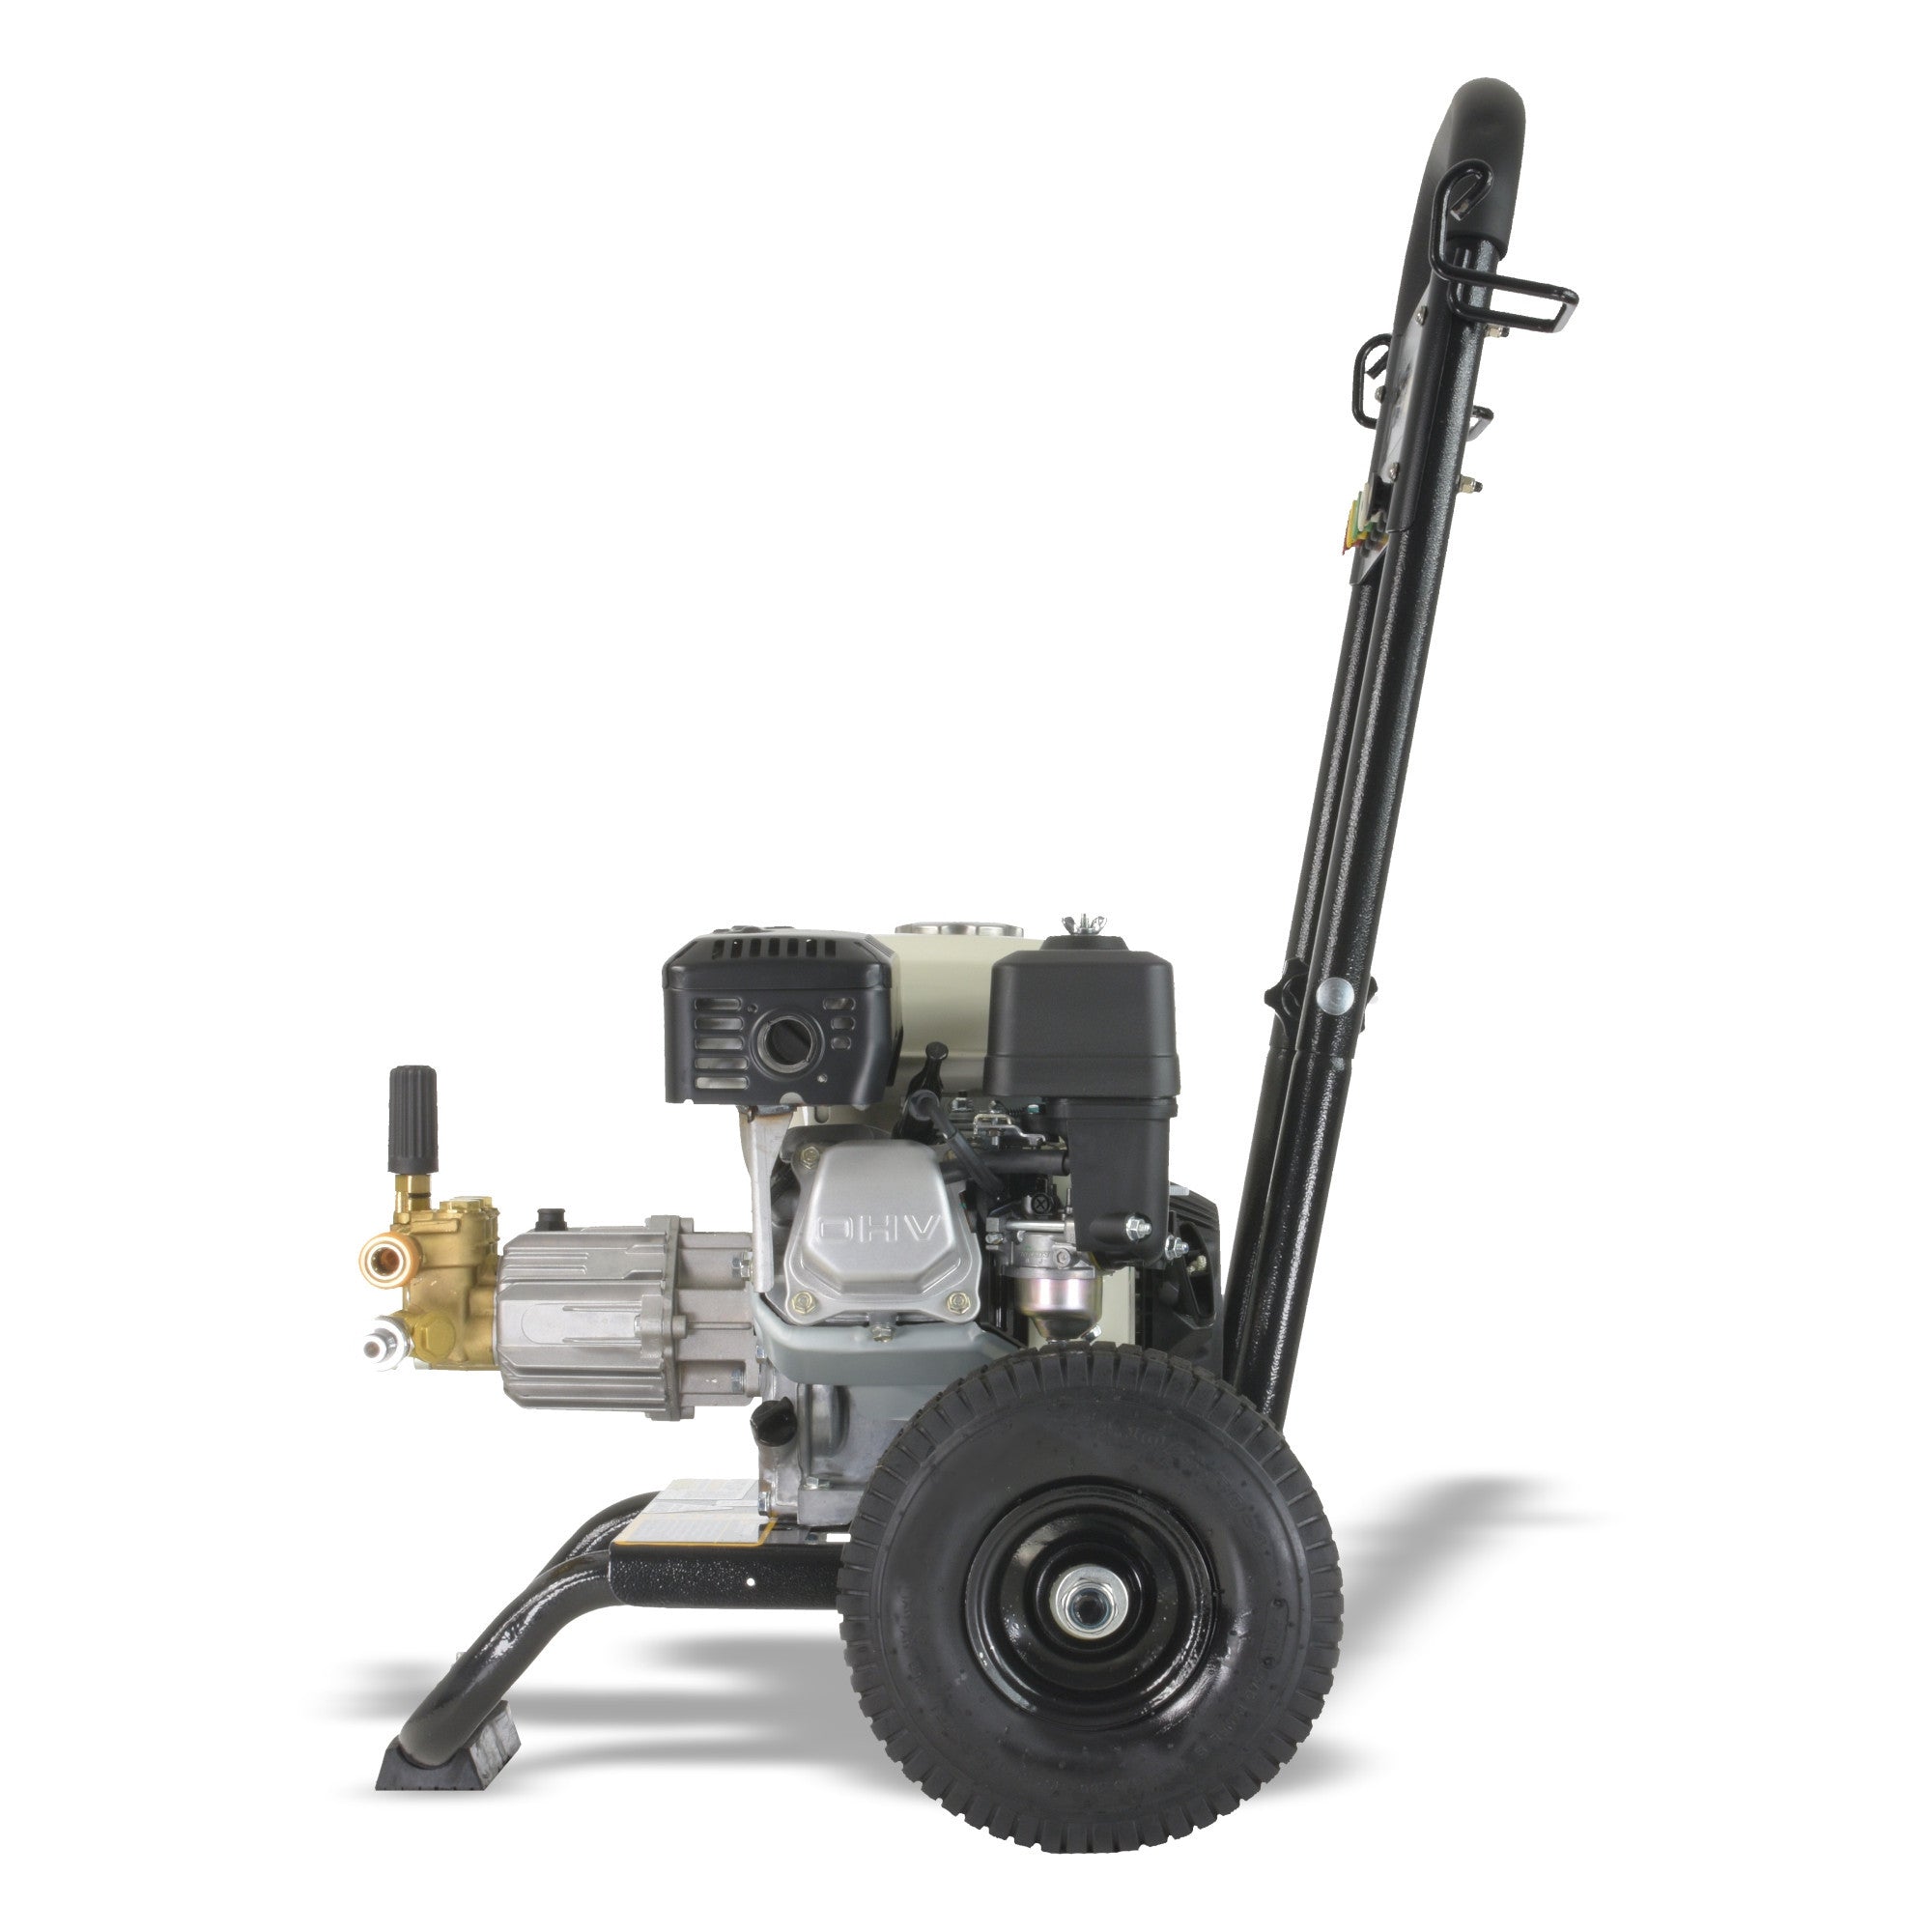 V-TUF GPT200 Industrial 6.5HP Petrol Pressure Washer with Honda Engine - 2755psi, 190Bar, 12L/min Pump